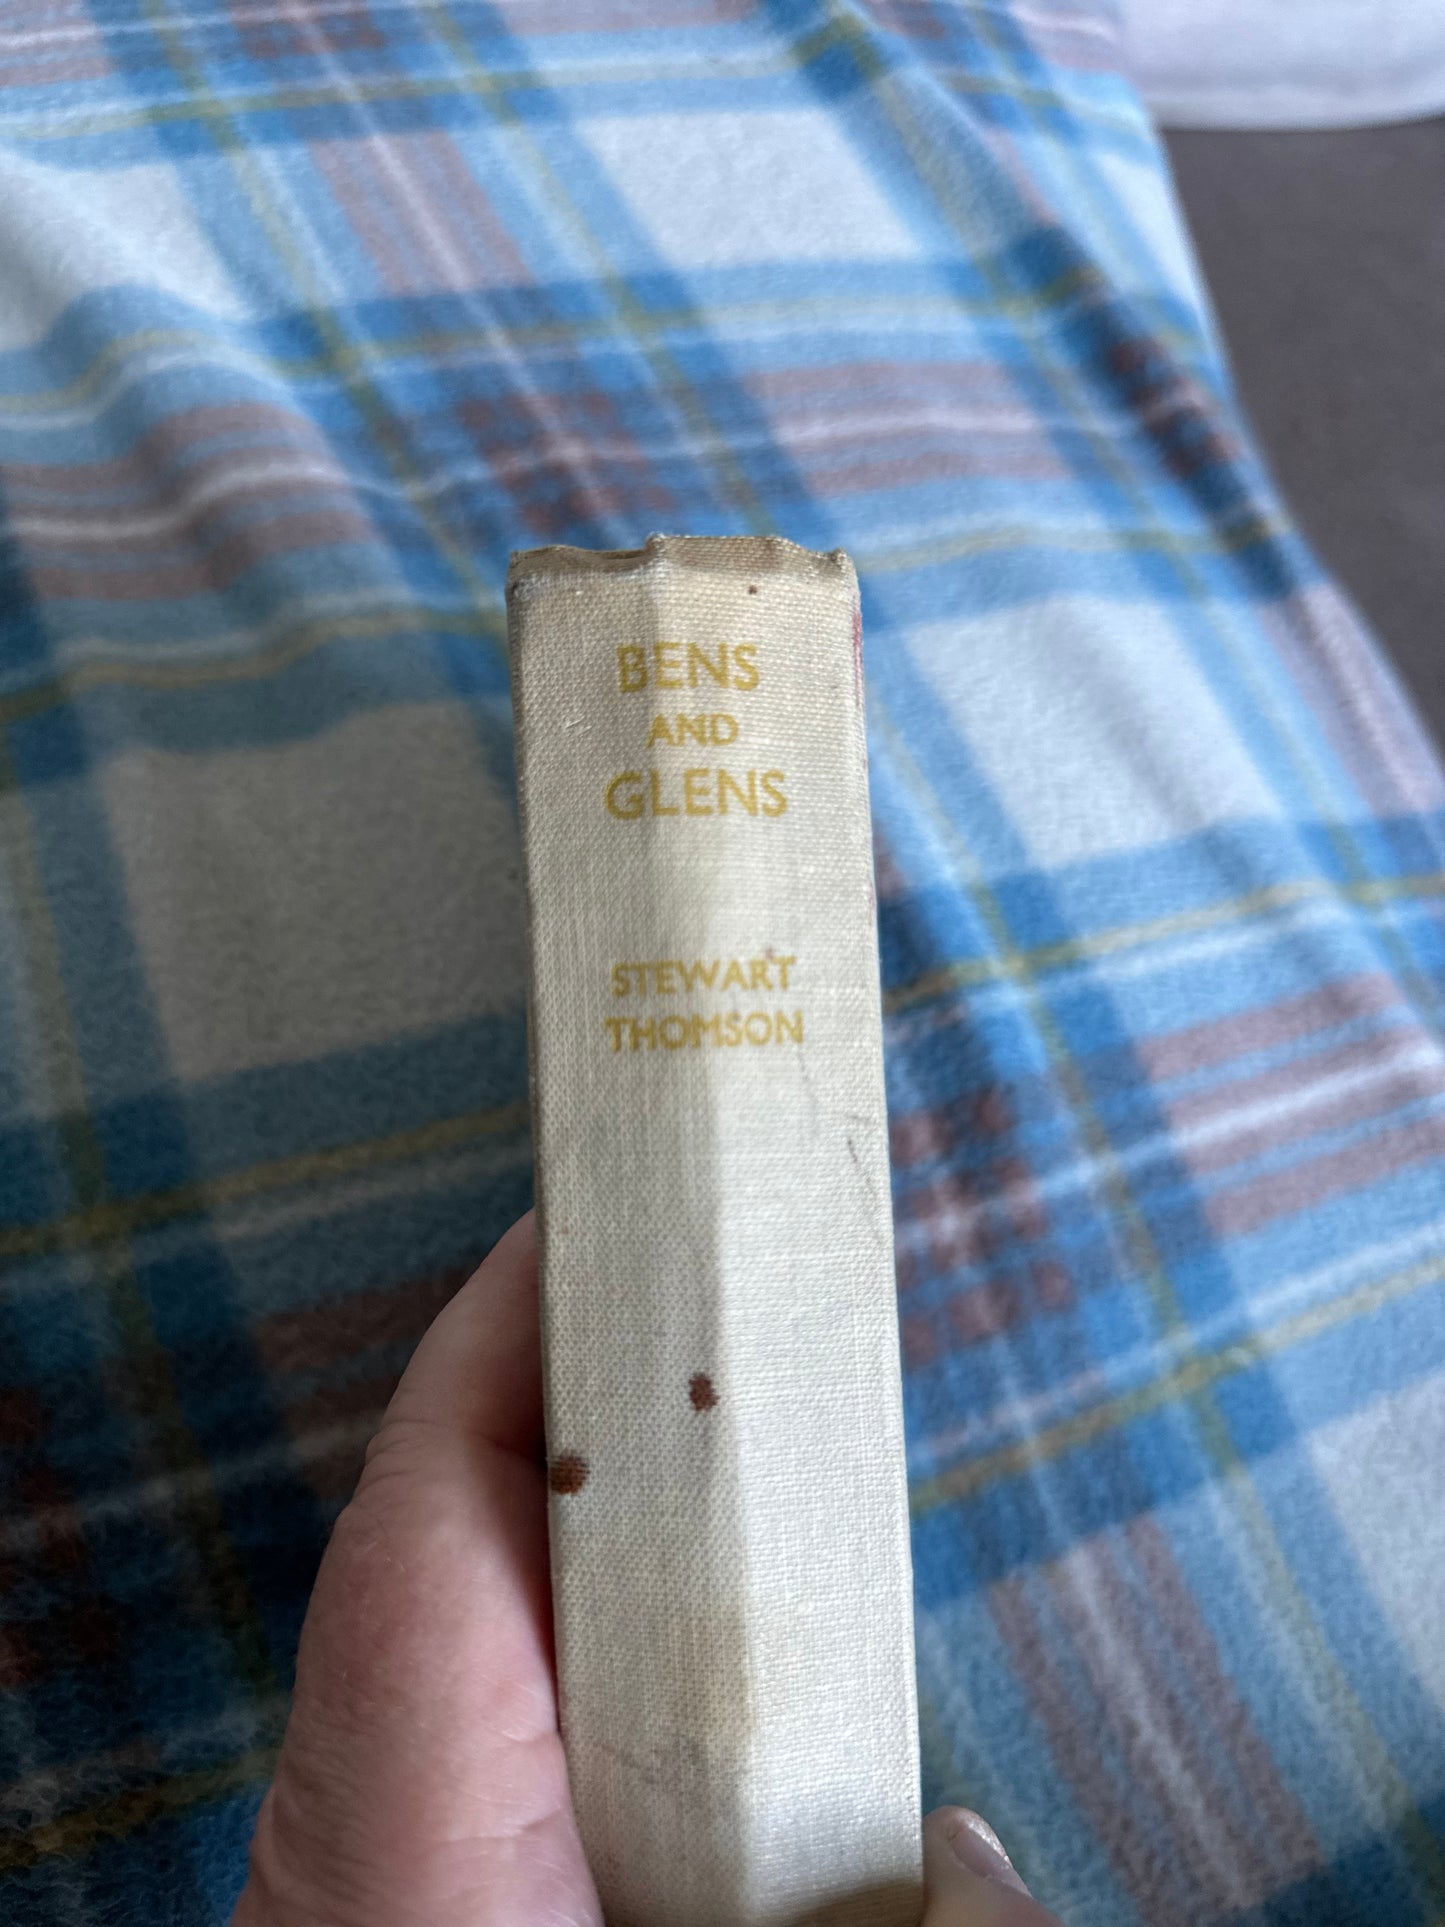 1938 Bens & Glens by T. B. Stewart Thomson(James Clarke & Co Ltd)